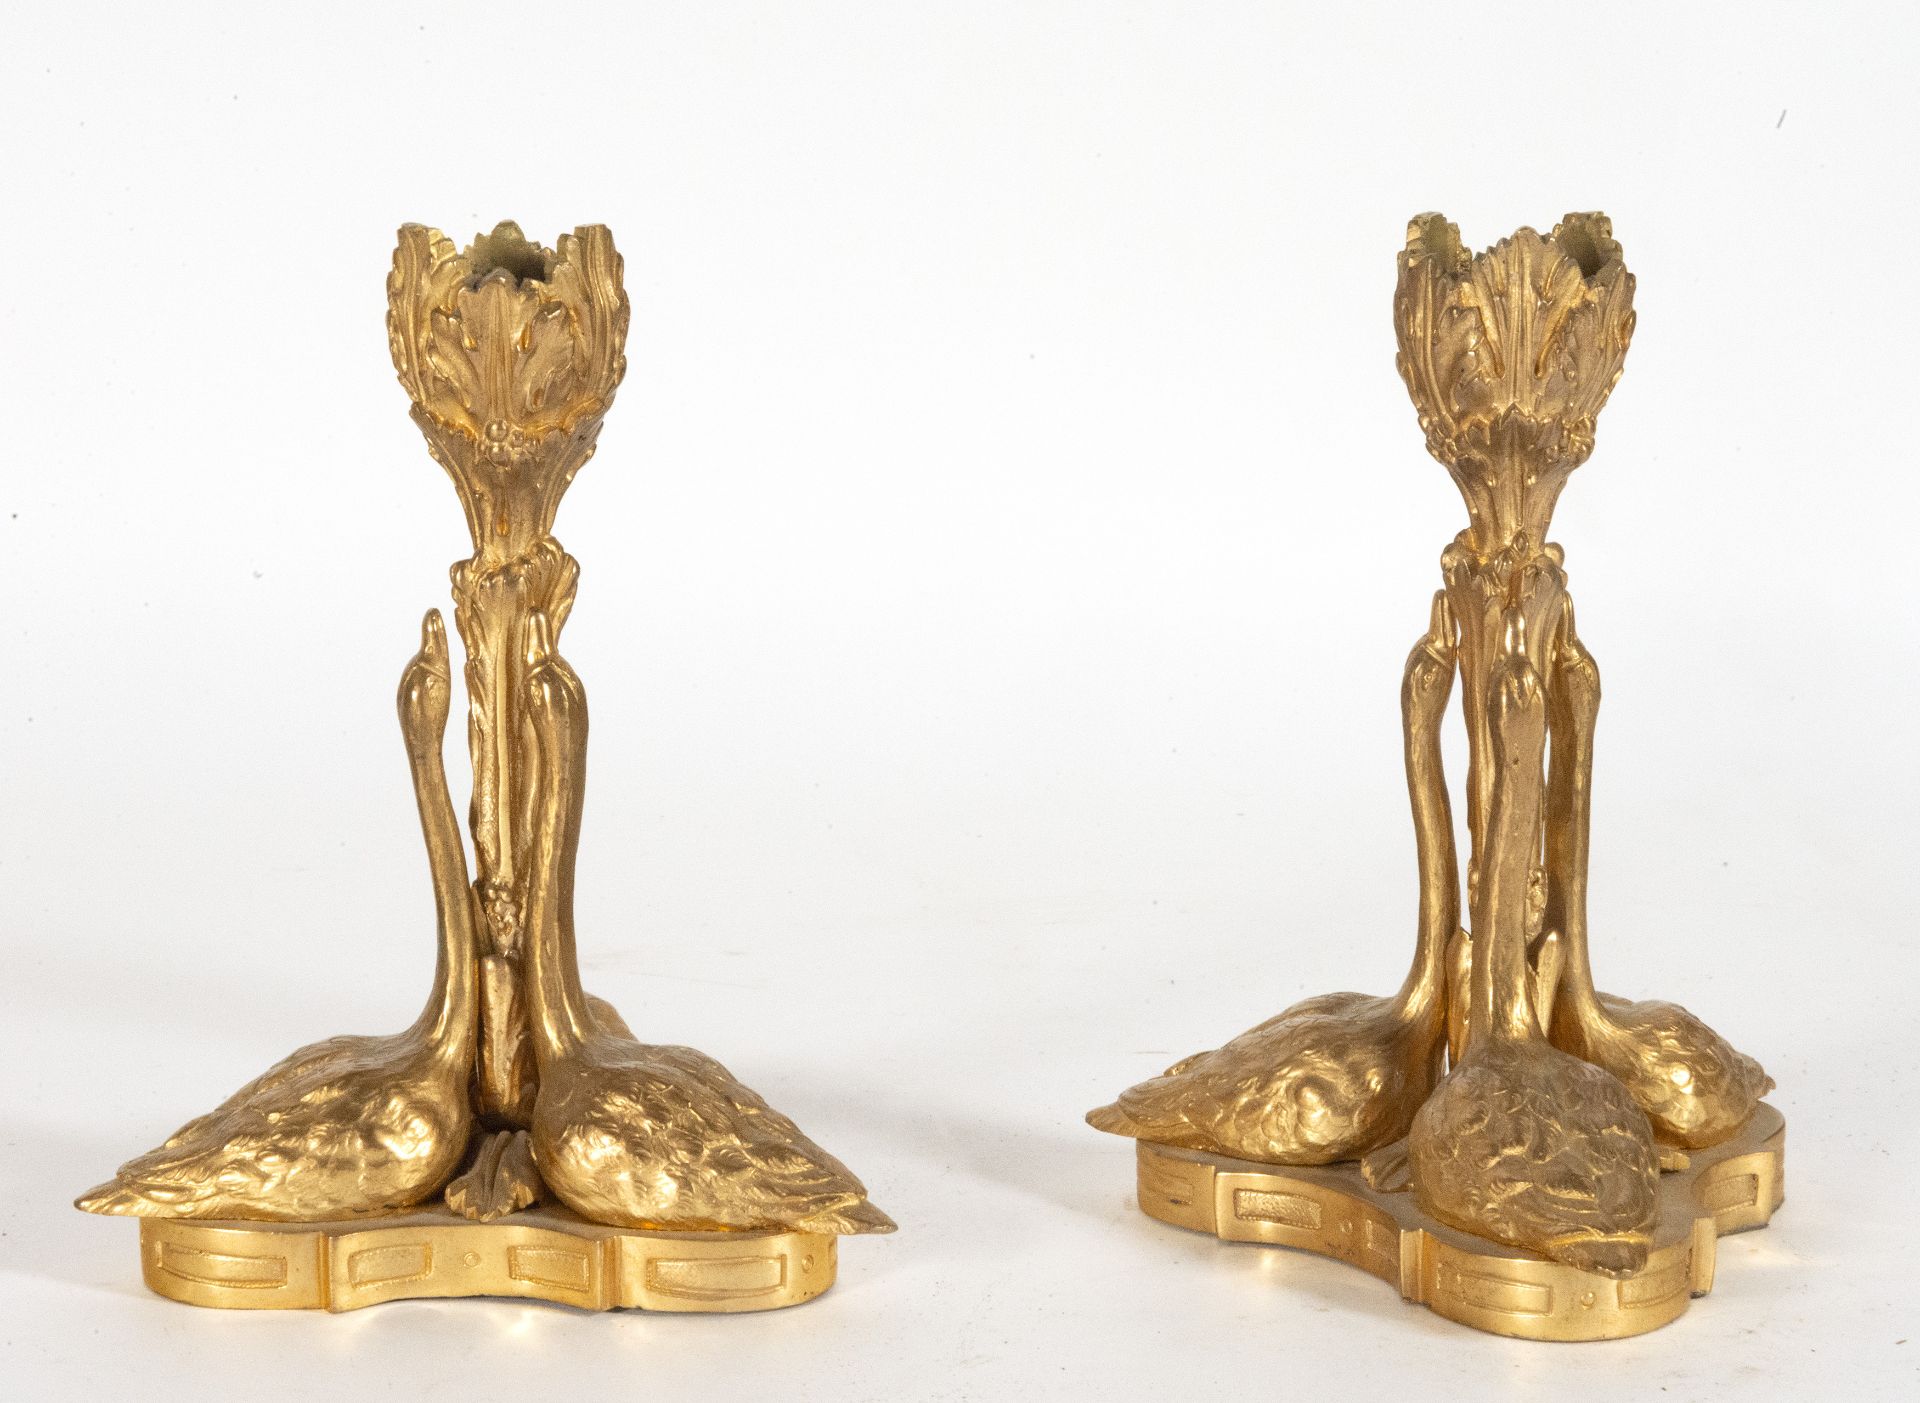 Rare pair of Art Nouveau Swan Candelabras, in Gilt bronze, Austria or France, 1900 - Image 3 of 3